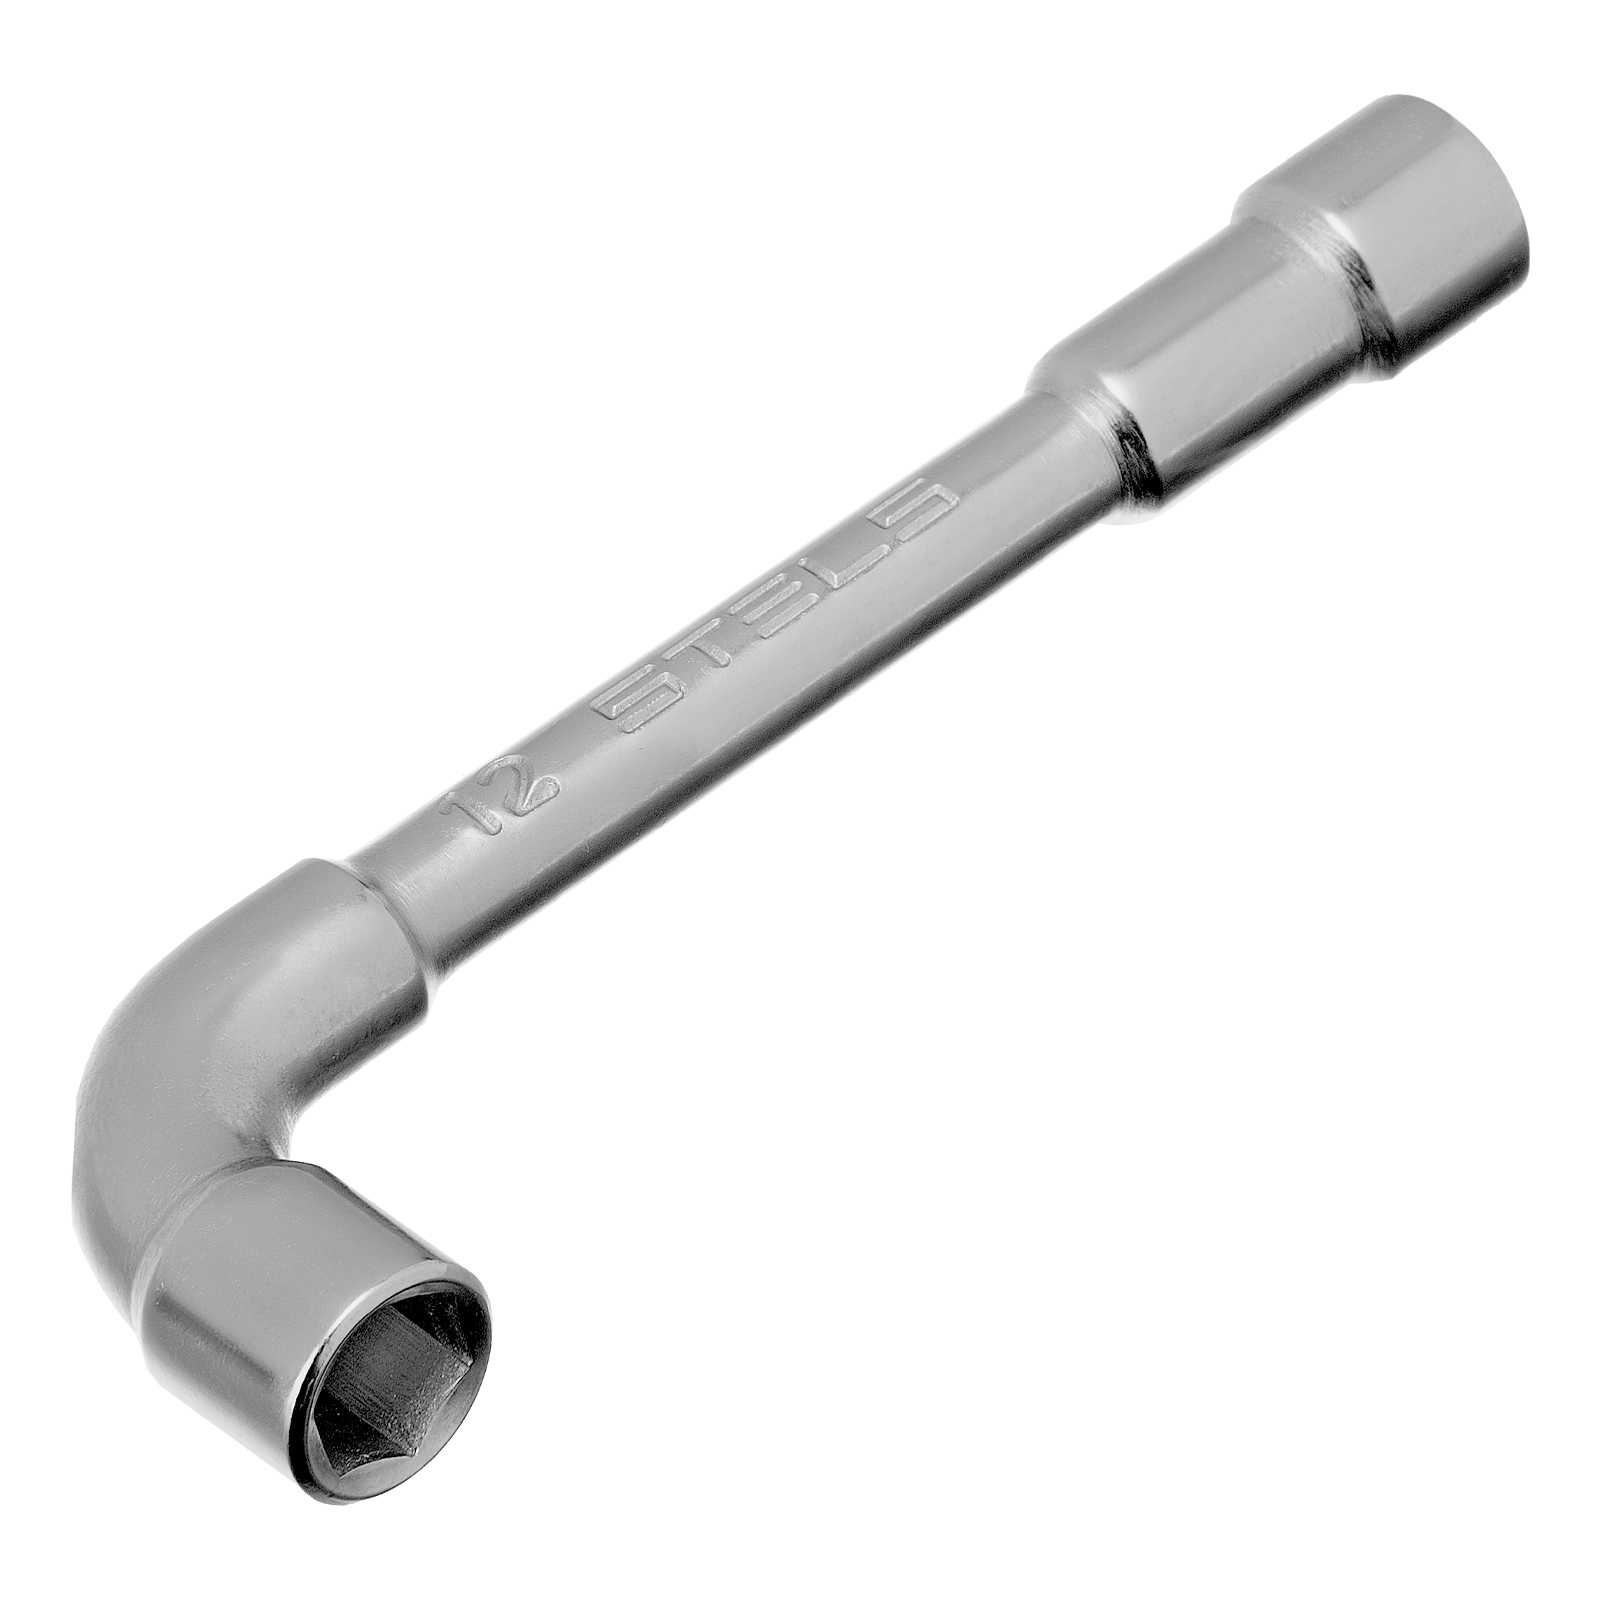 Торцевой трубчатый ключ STELS 14233 торцевой трубчатый ключ stels 14235